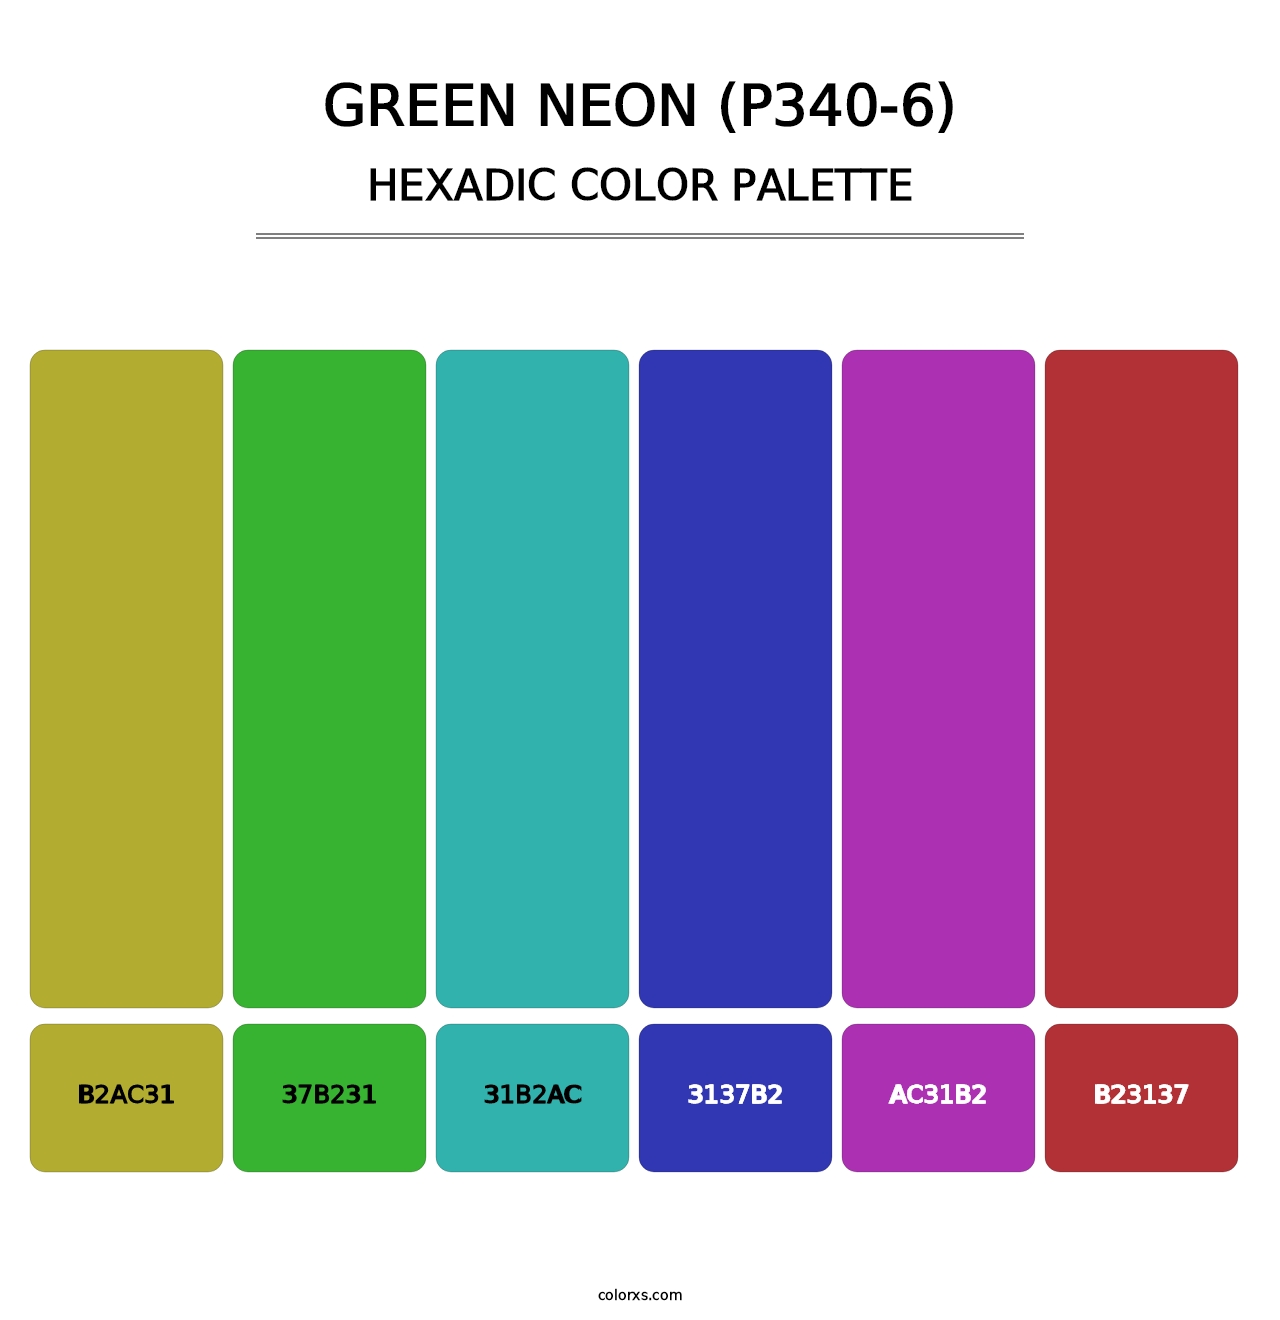 Green Neon (P340-6) - Hexadic Color Palette